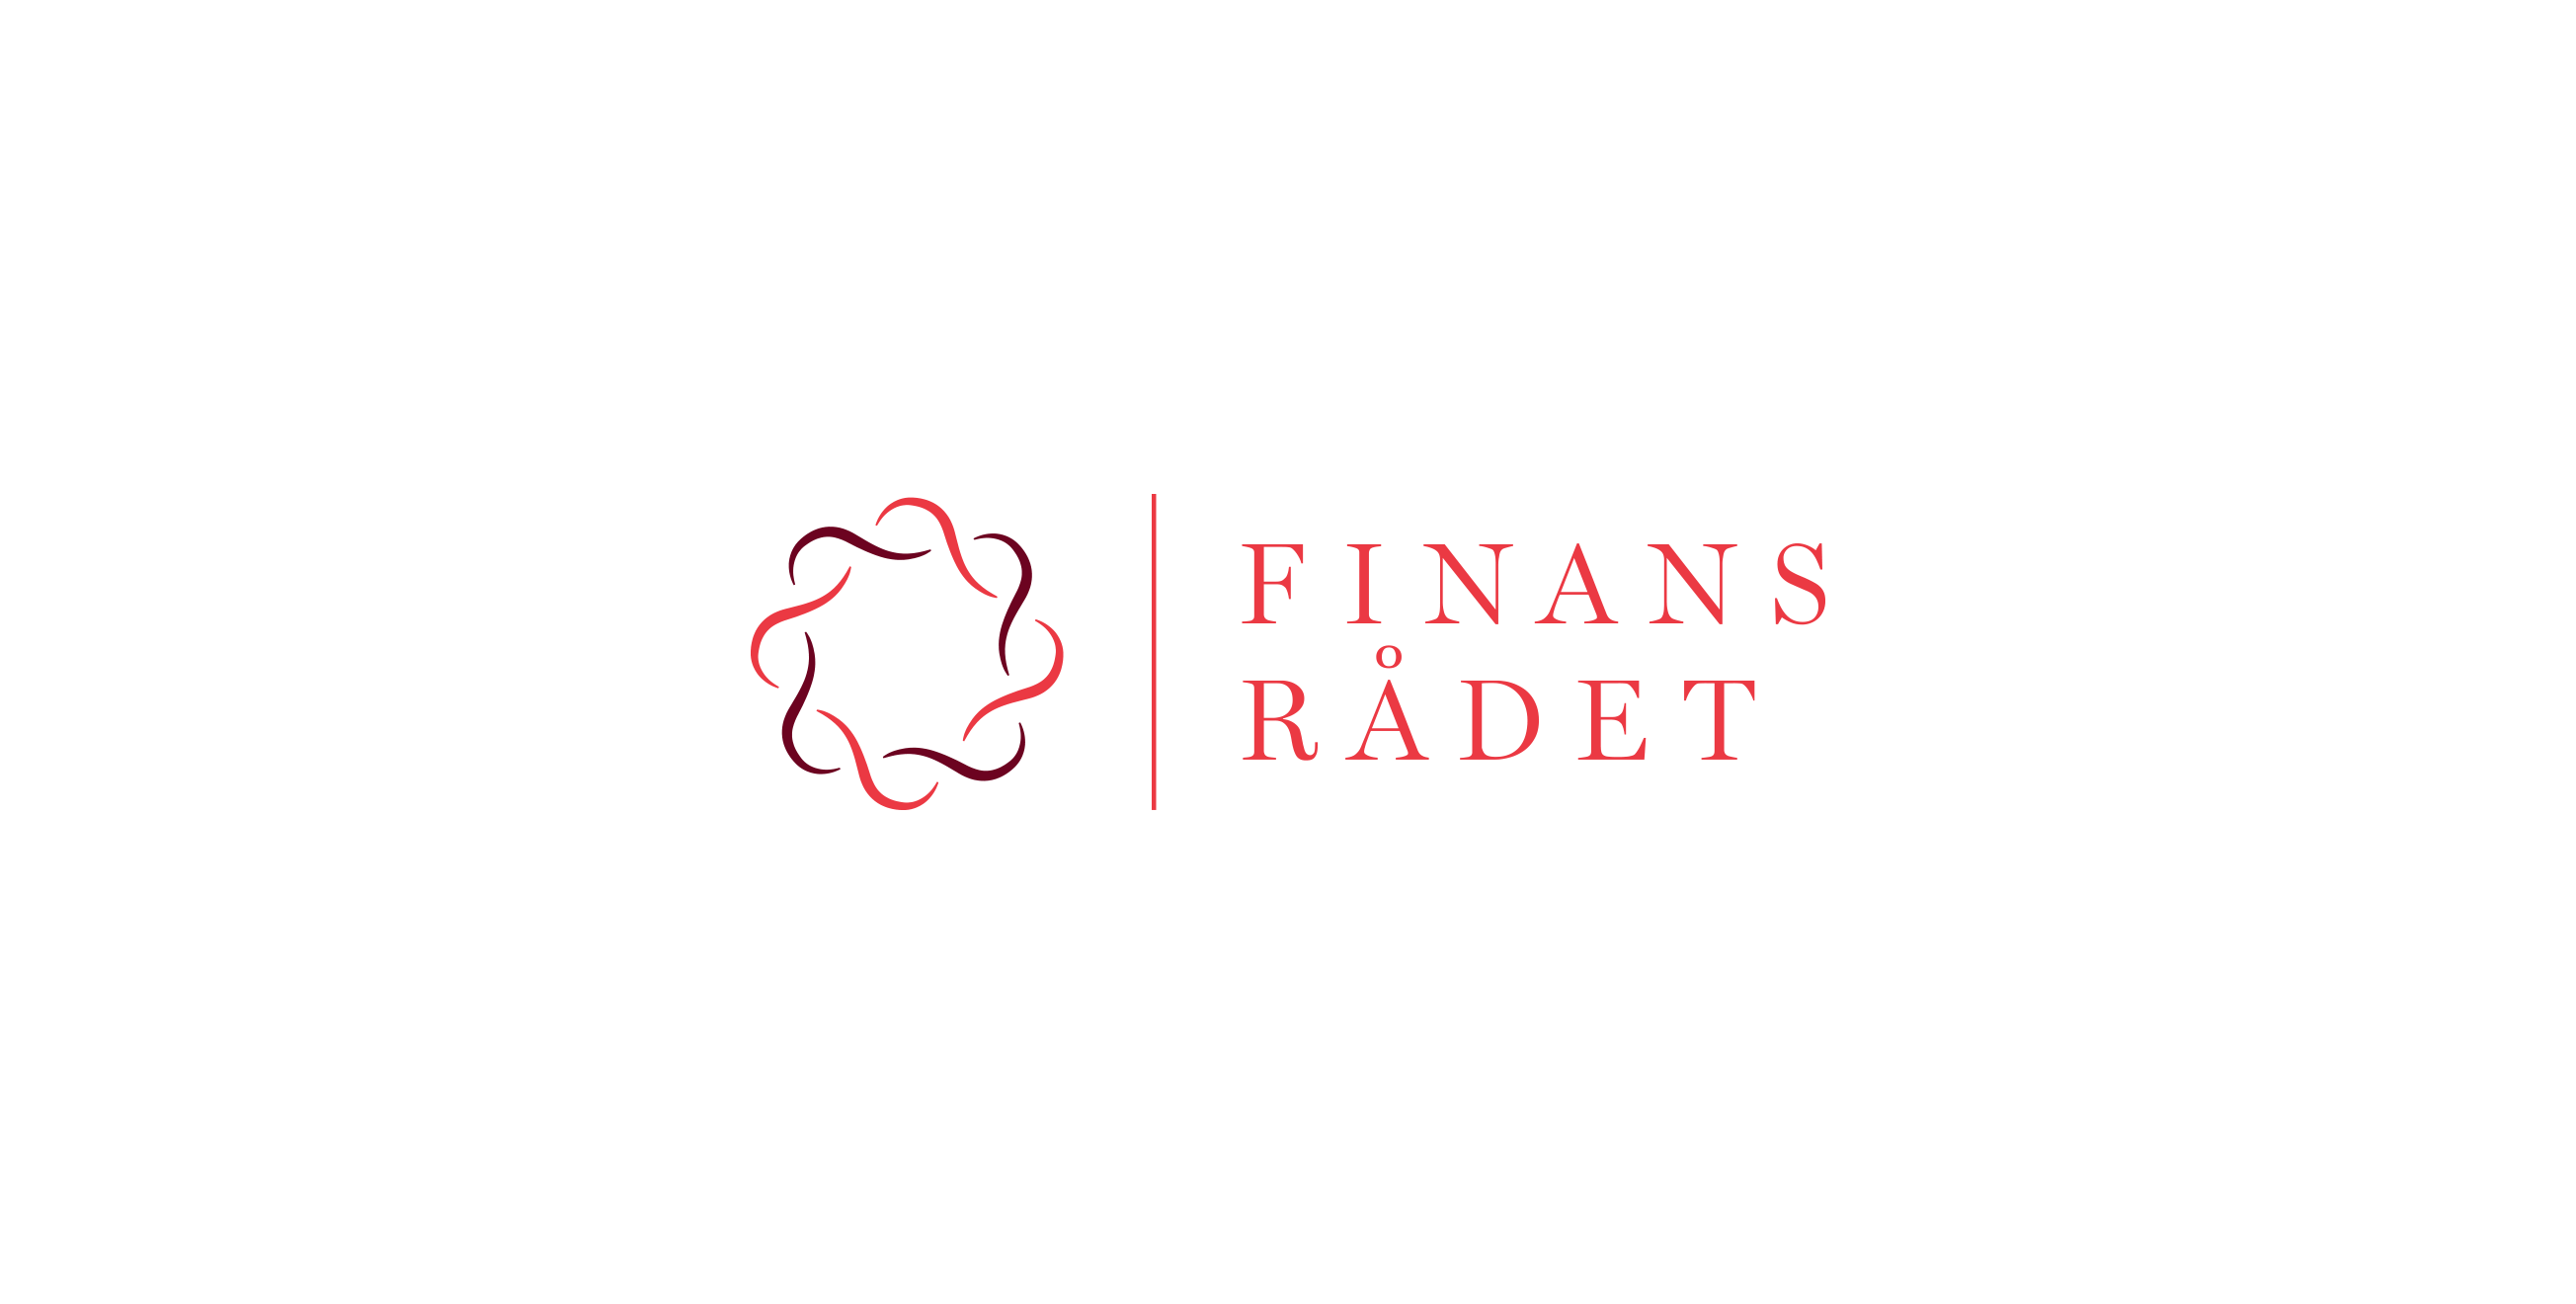 Danish Bankers Association — Logo design.